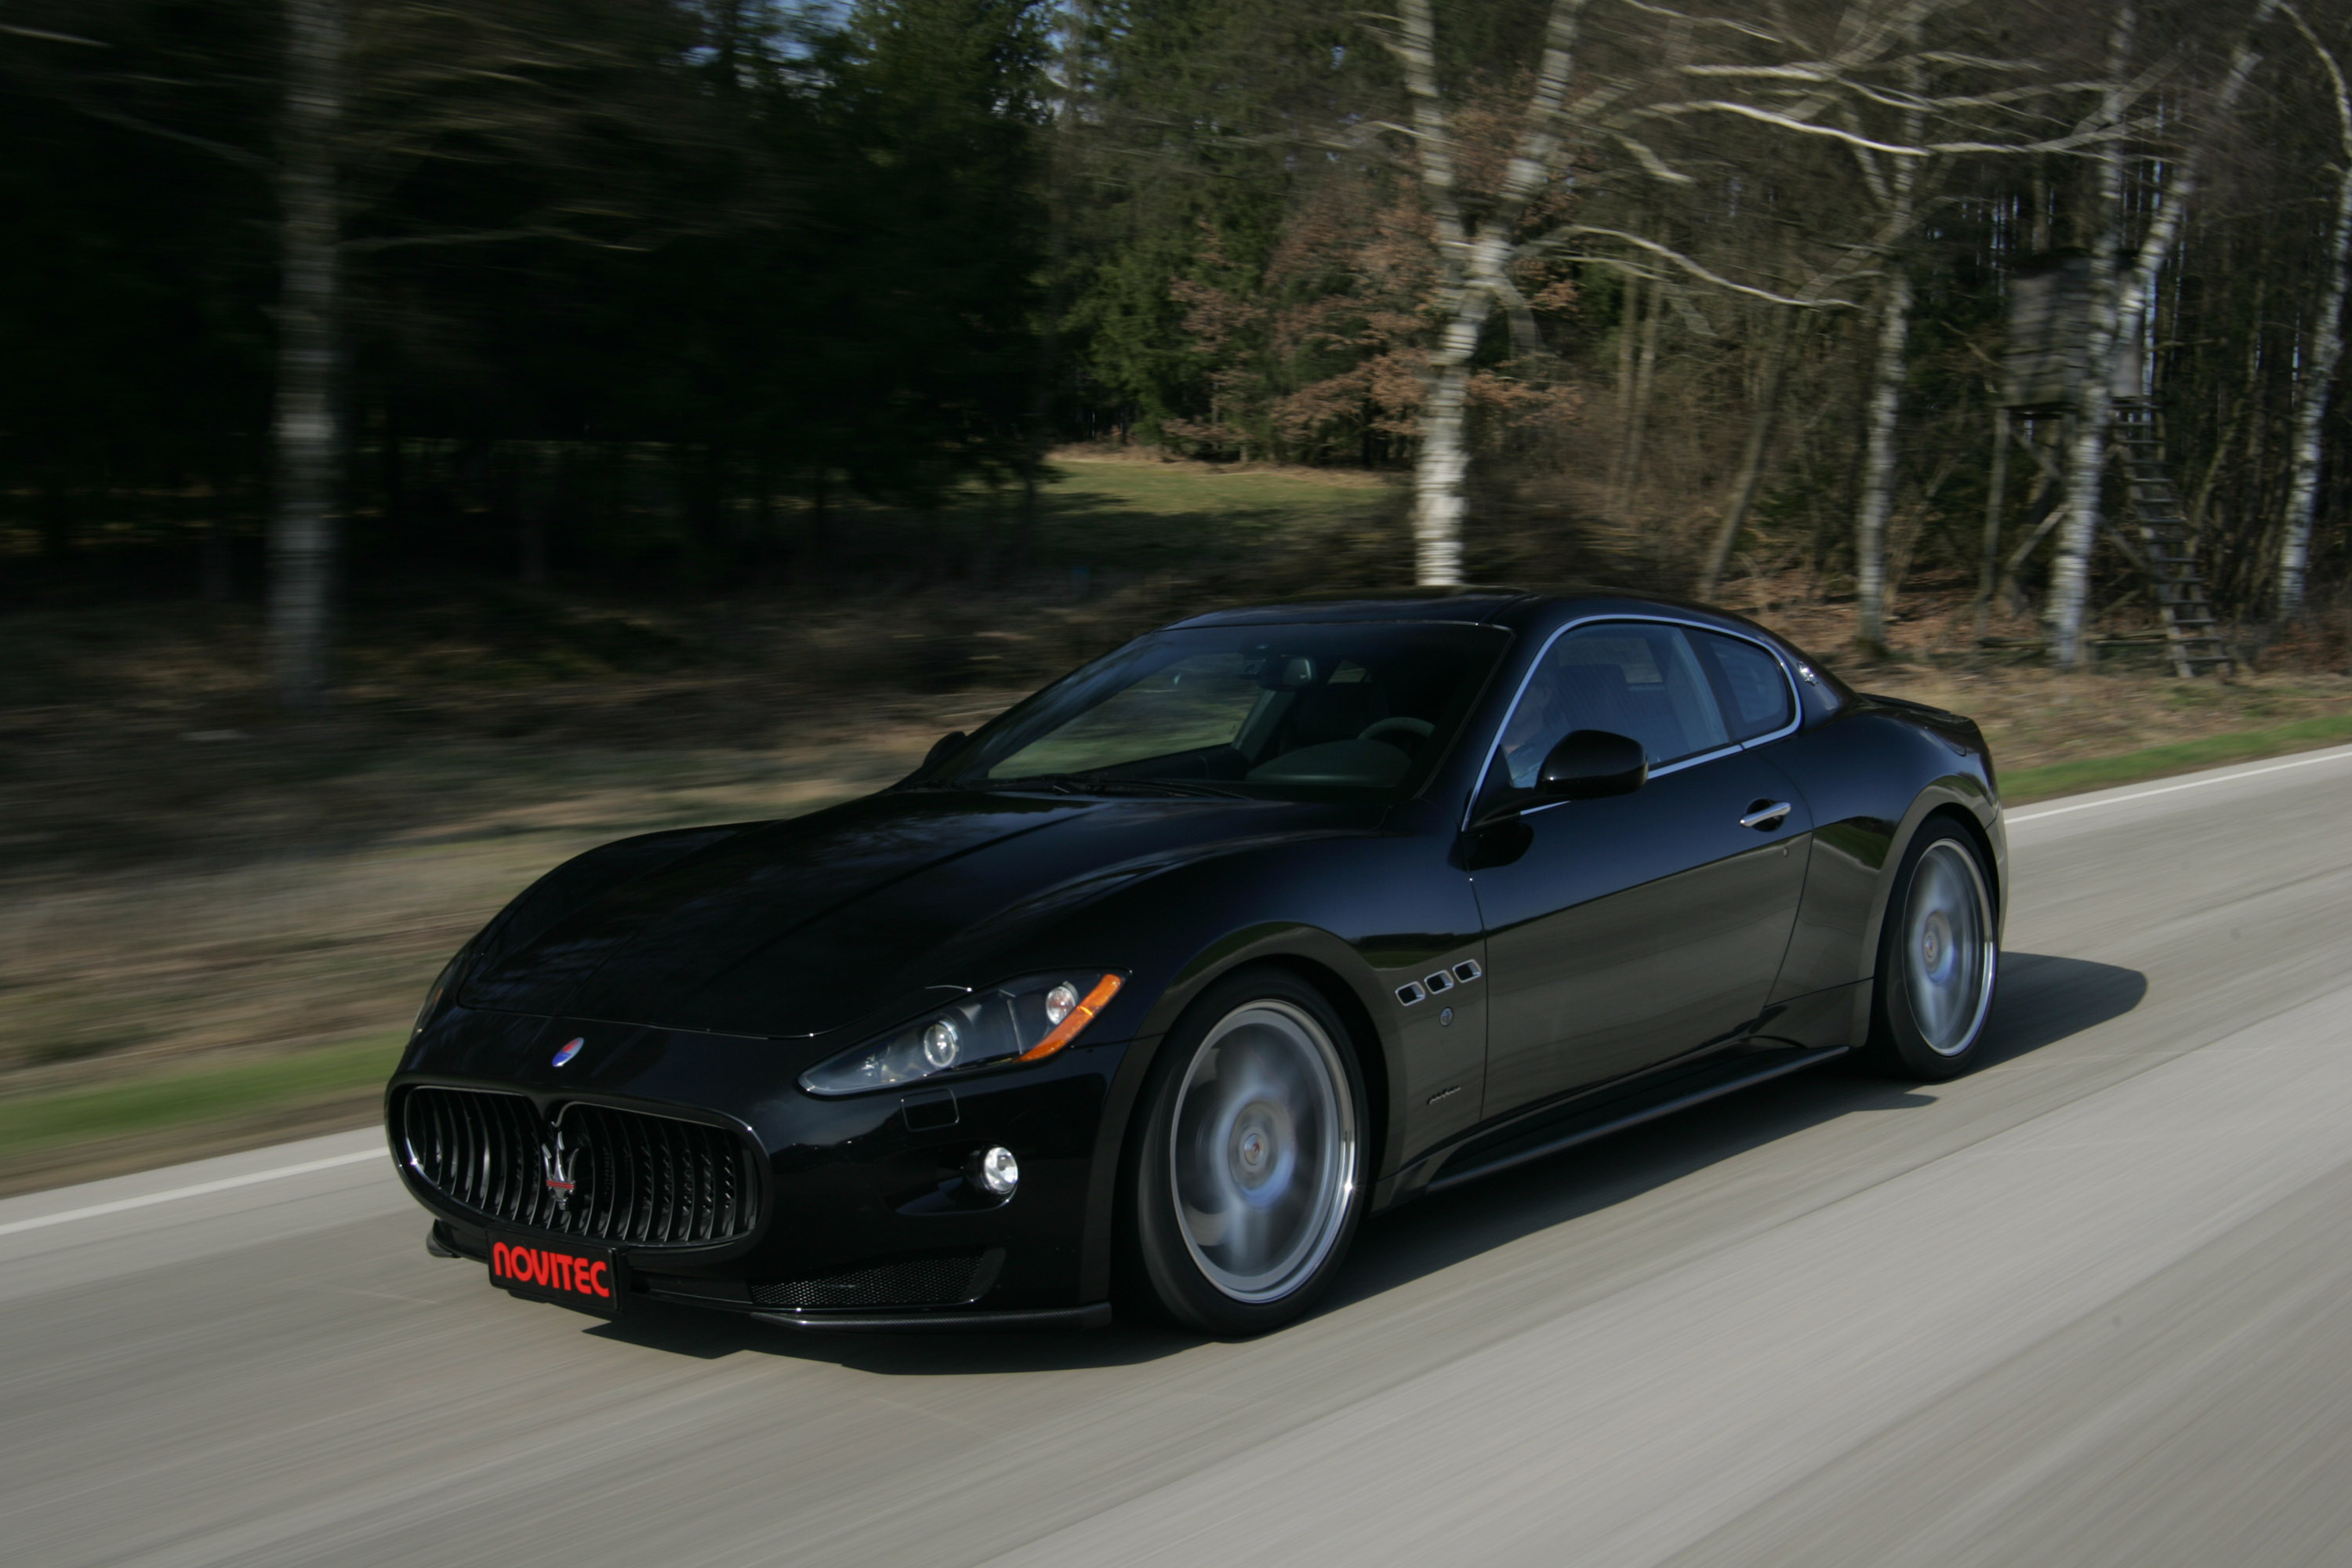 NOVITEC TRIDENTE Maserati GranTurismo S